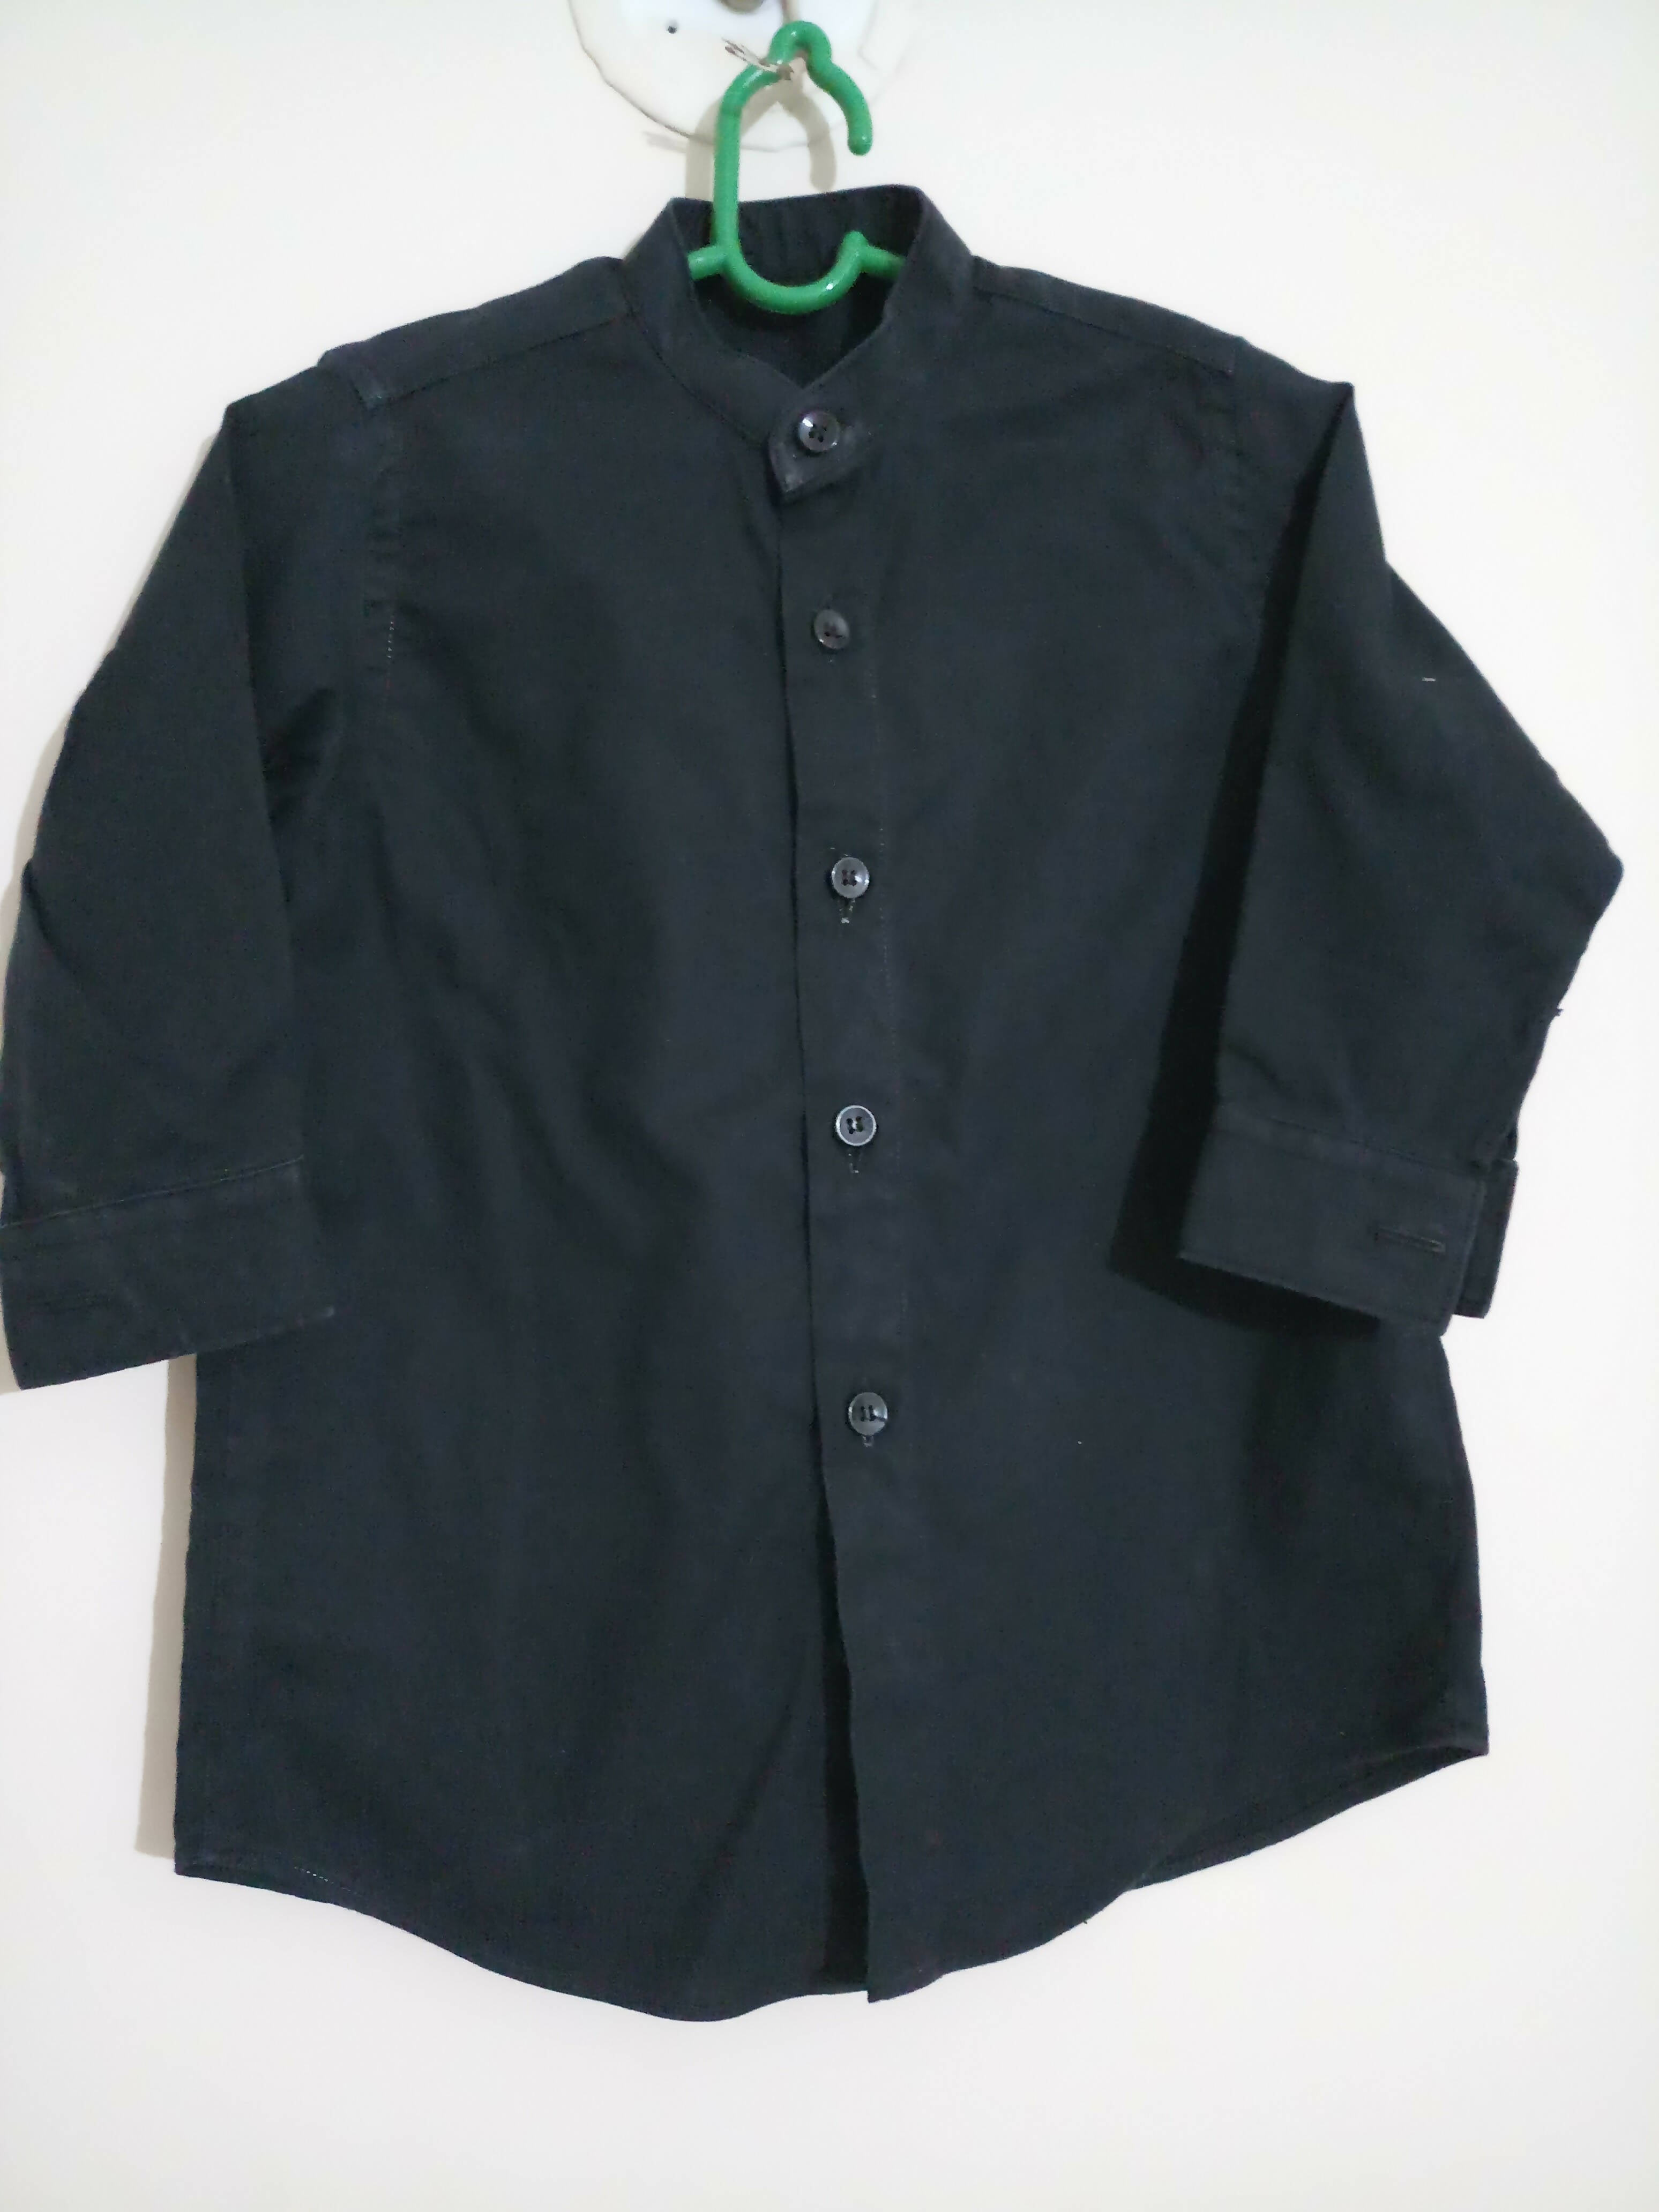 Black shirt for boys | Boys Tops & Shirts | Preloved